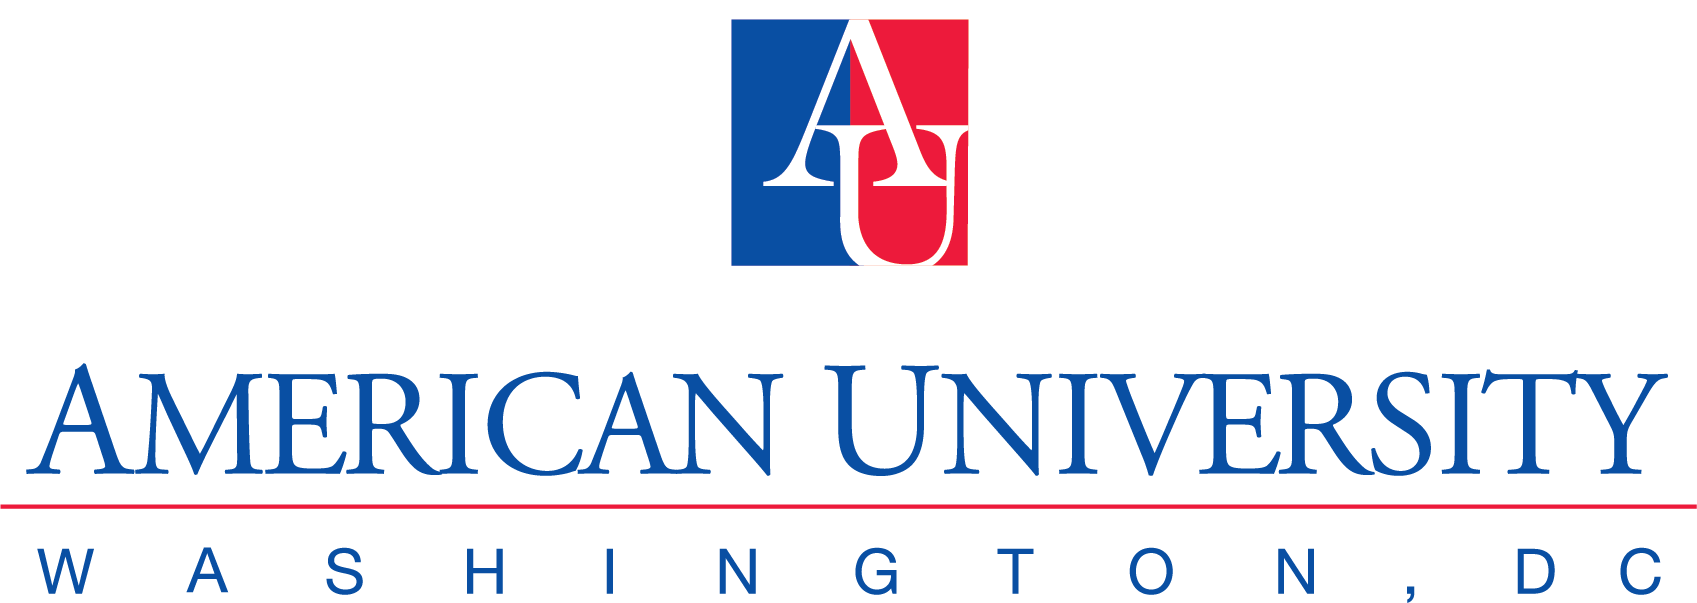 American University logo.png